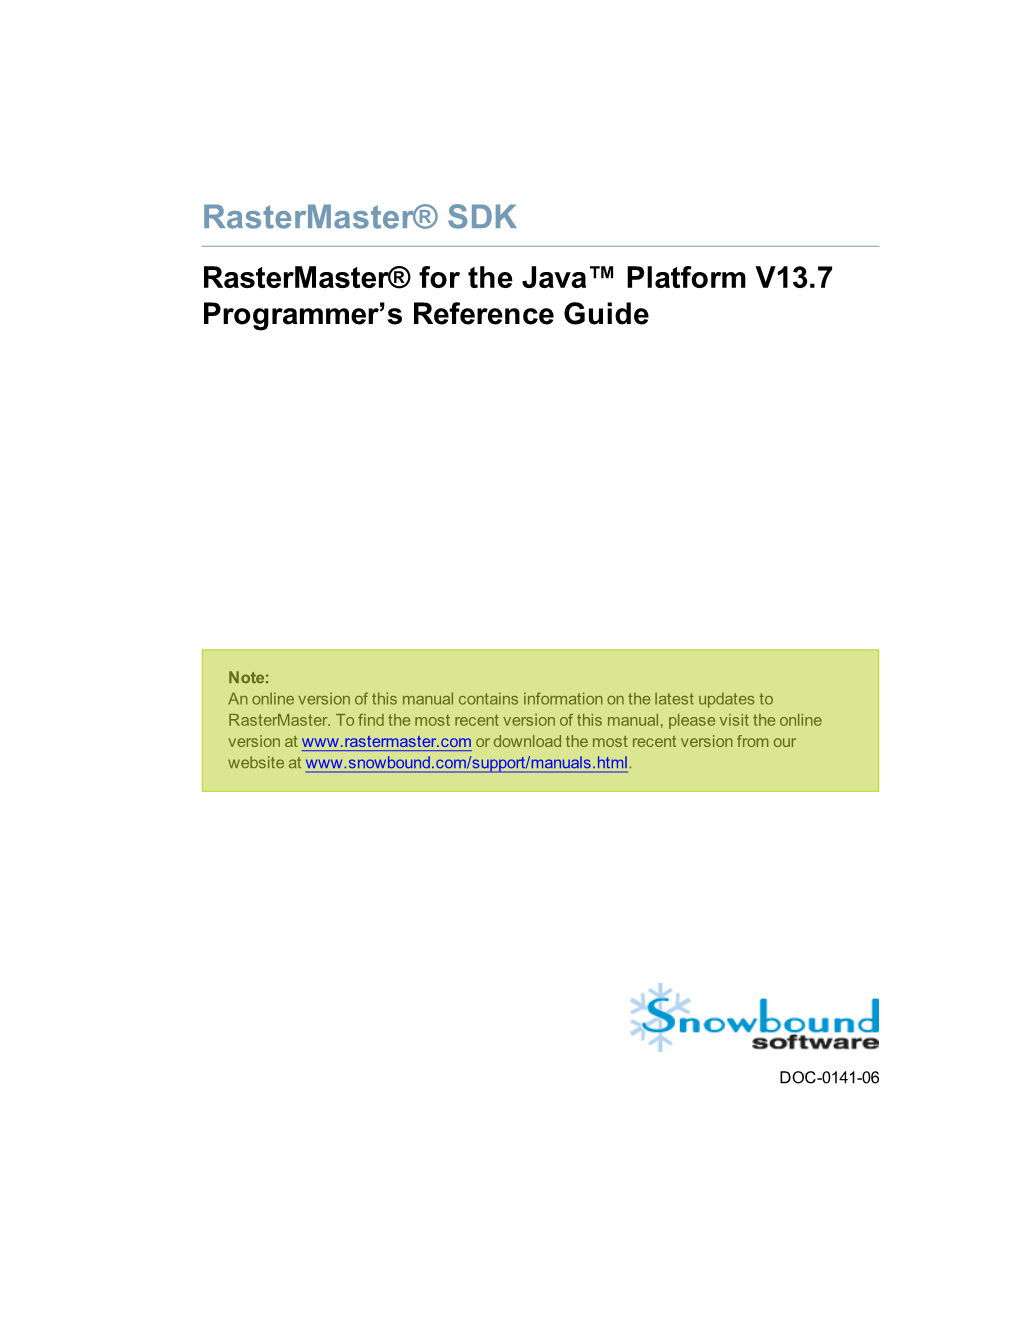 Rastermaster® for the Java™ Platform V13.7 Programmer's Reference